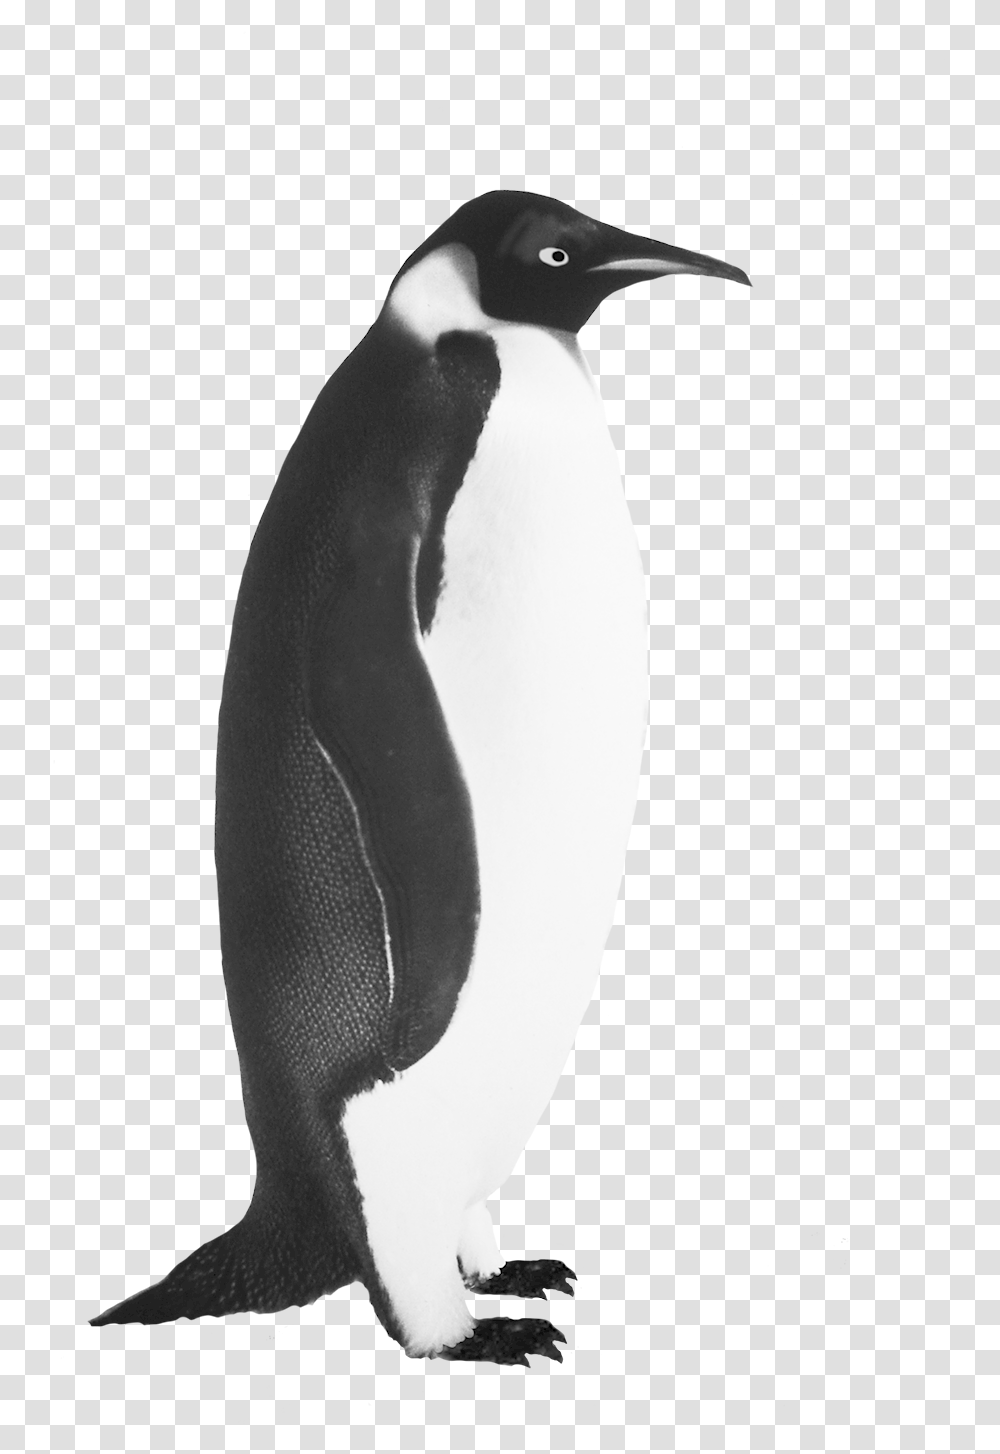 Penguin Clipart Vintage Realistic Penguin Black And White, Bird, Animal, King Penguin Transparent Png